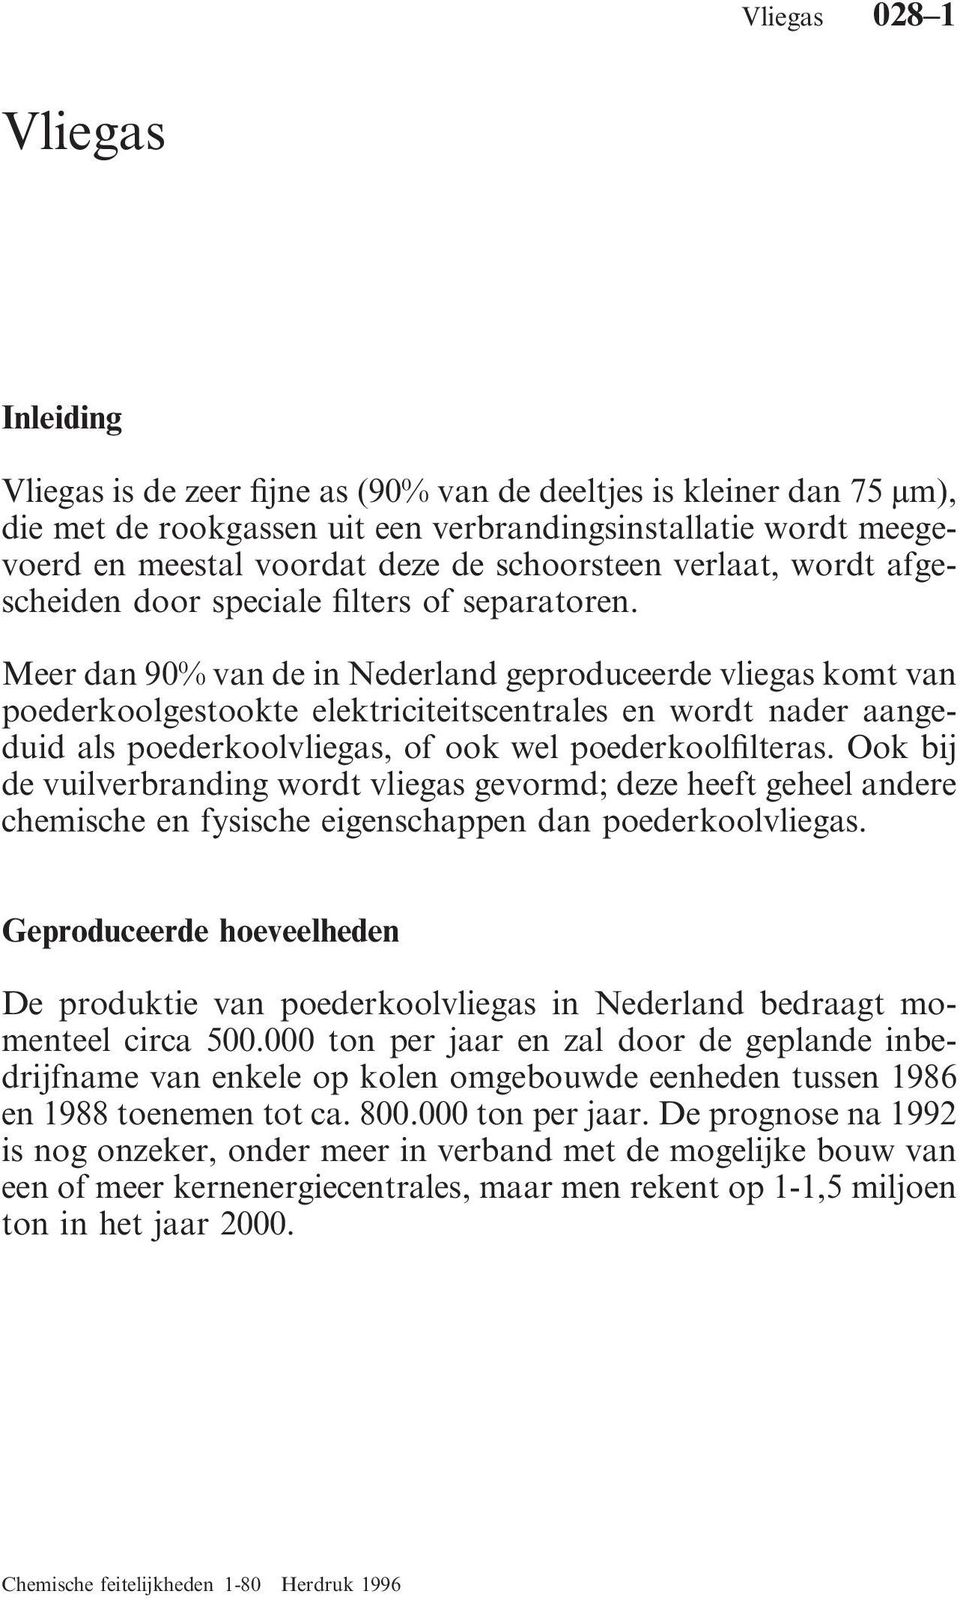 Meer dan 90% van de in Nederland geproduceerde vliegas komt van poederkoolgestookte elektriciteitscentrales en wordt nader aangeduid als poederkoolvliegas, of ook wel poederkoolfilteras.